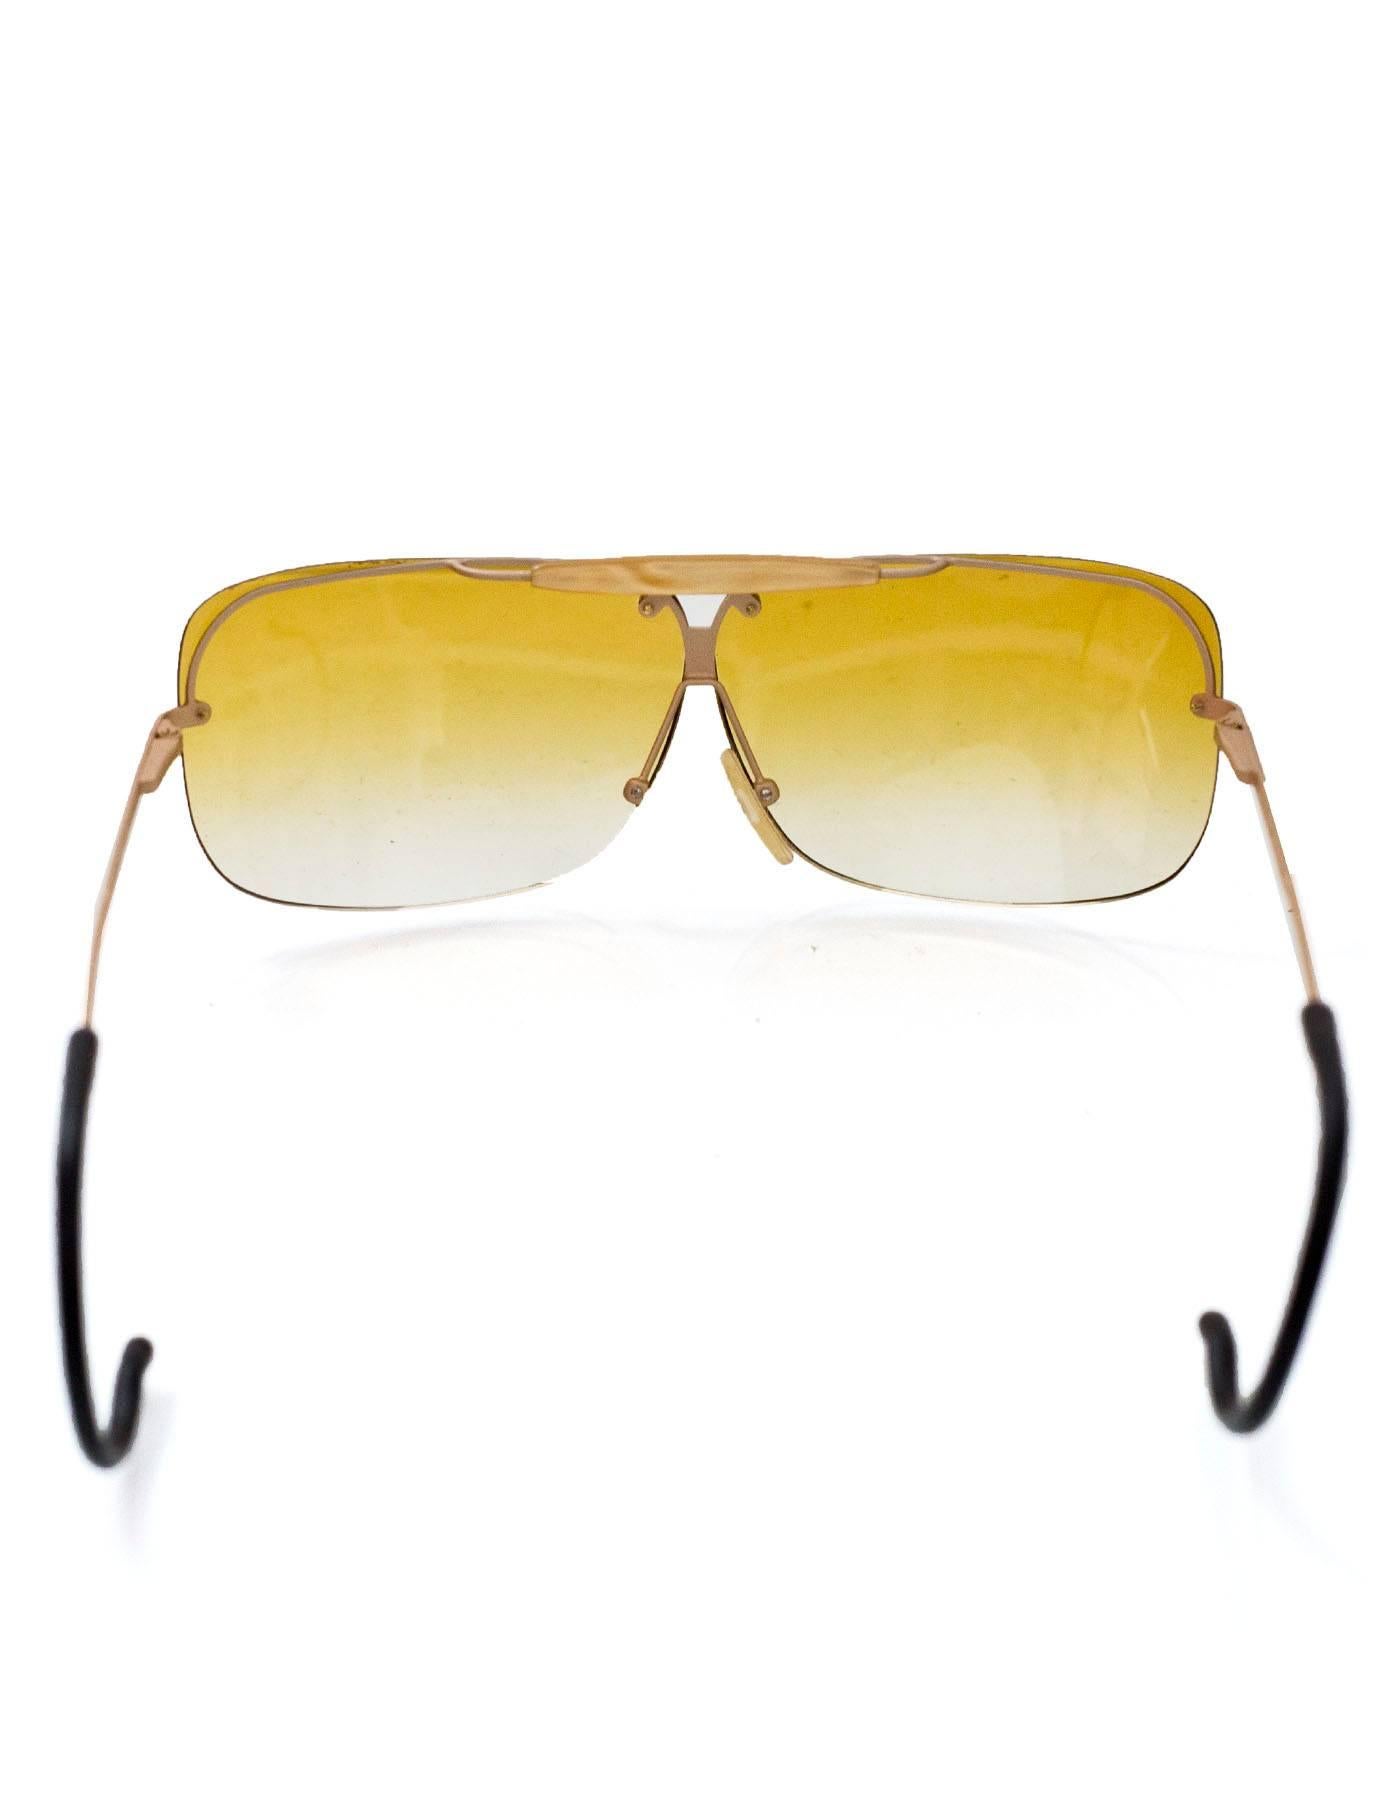 bottega sunglasses case